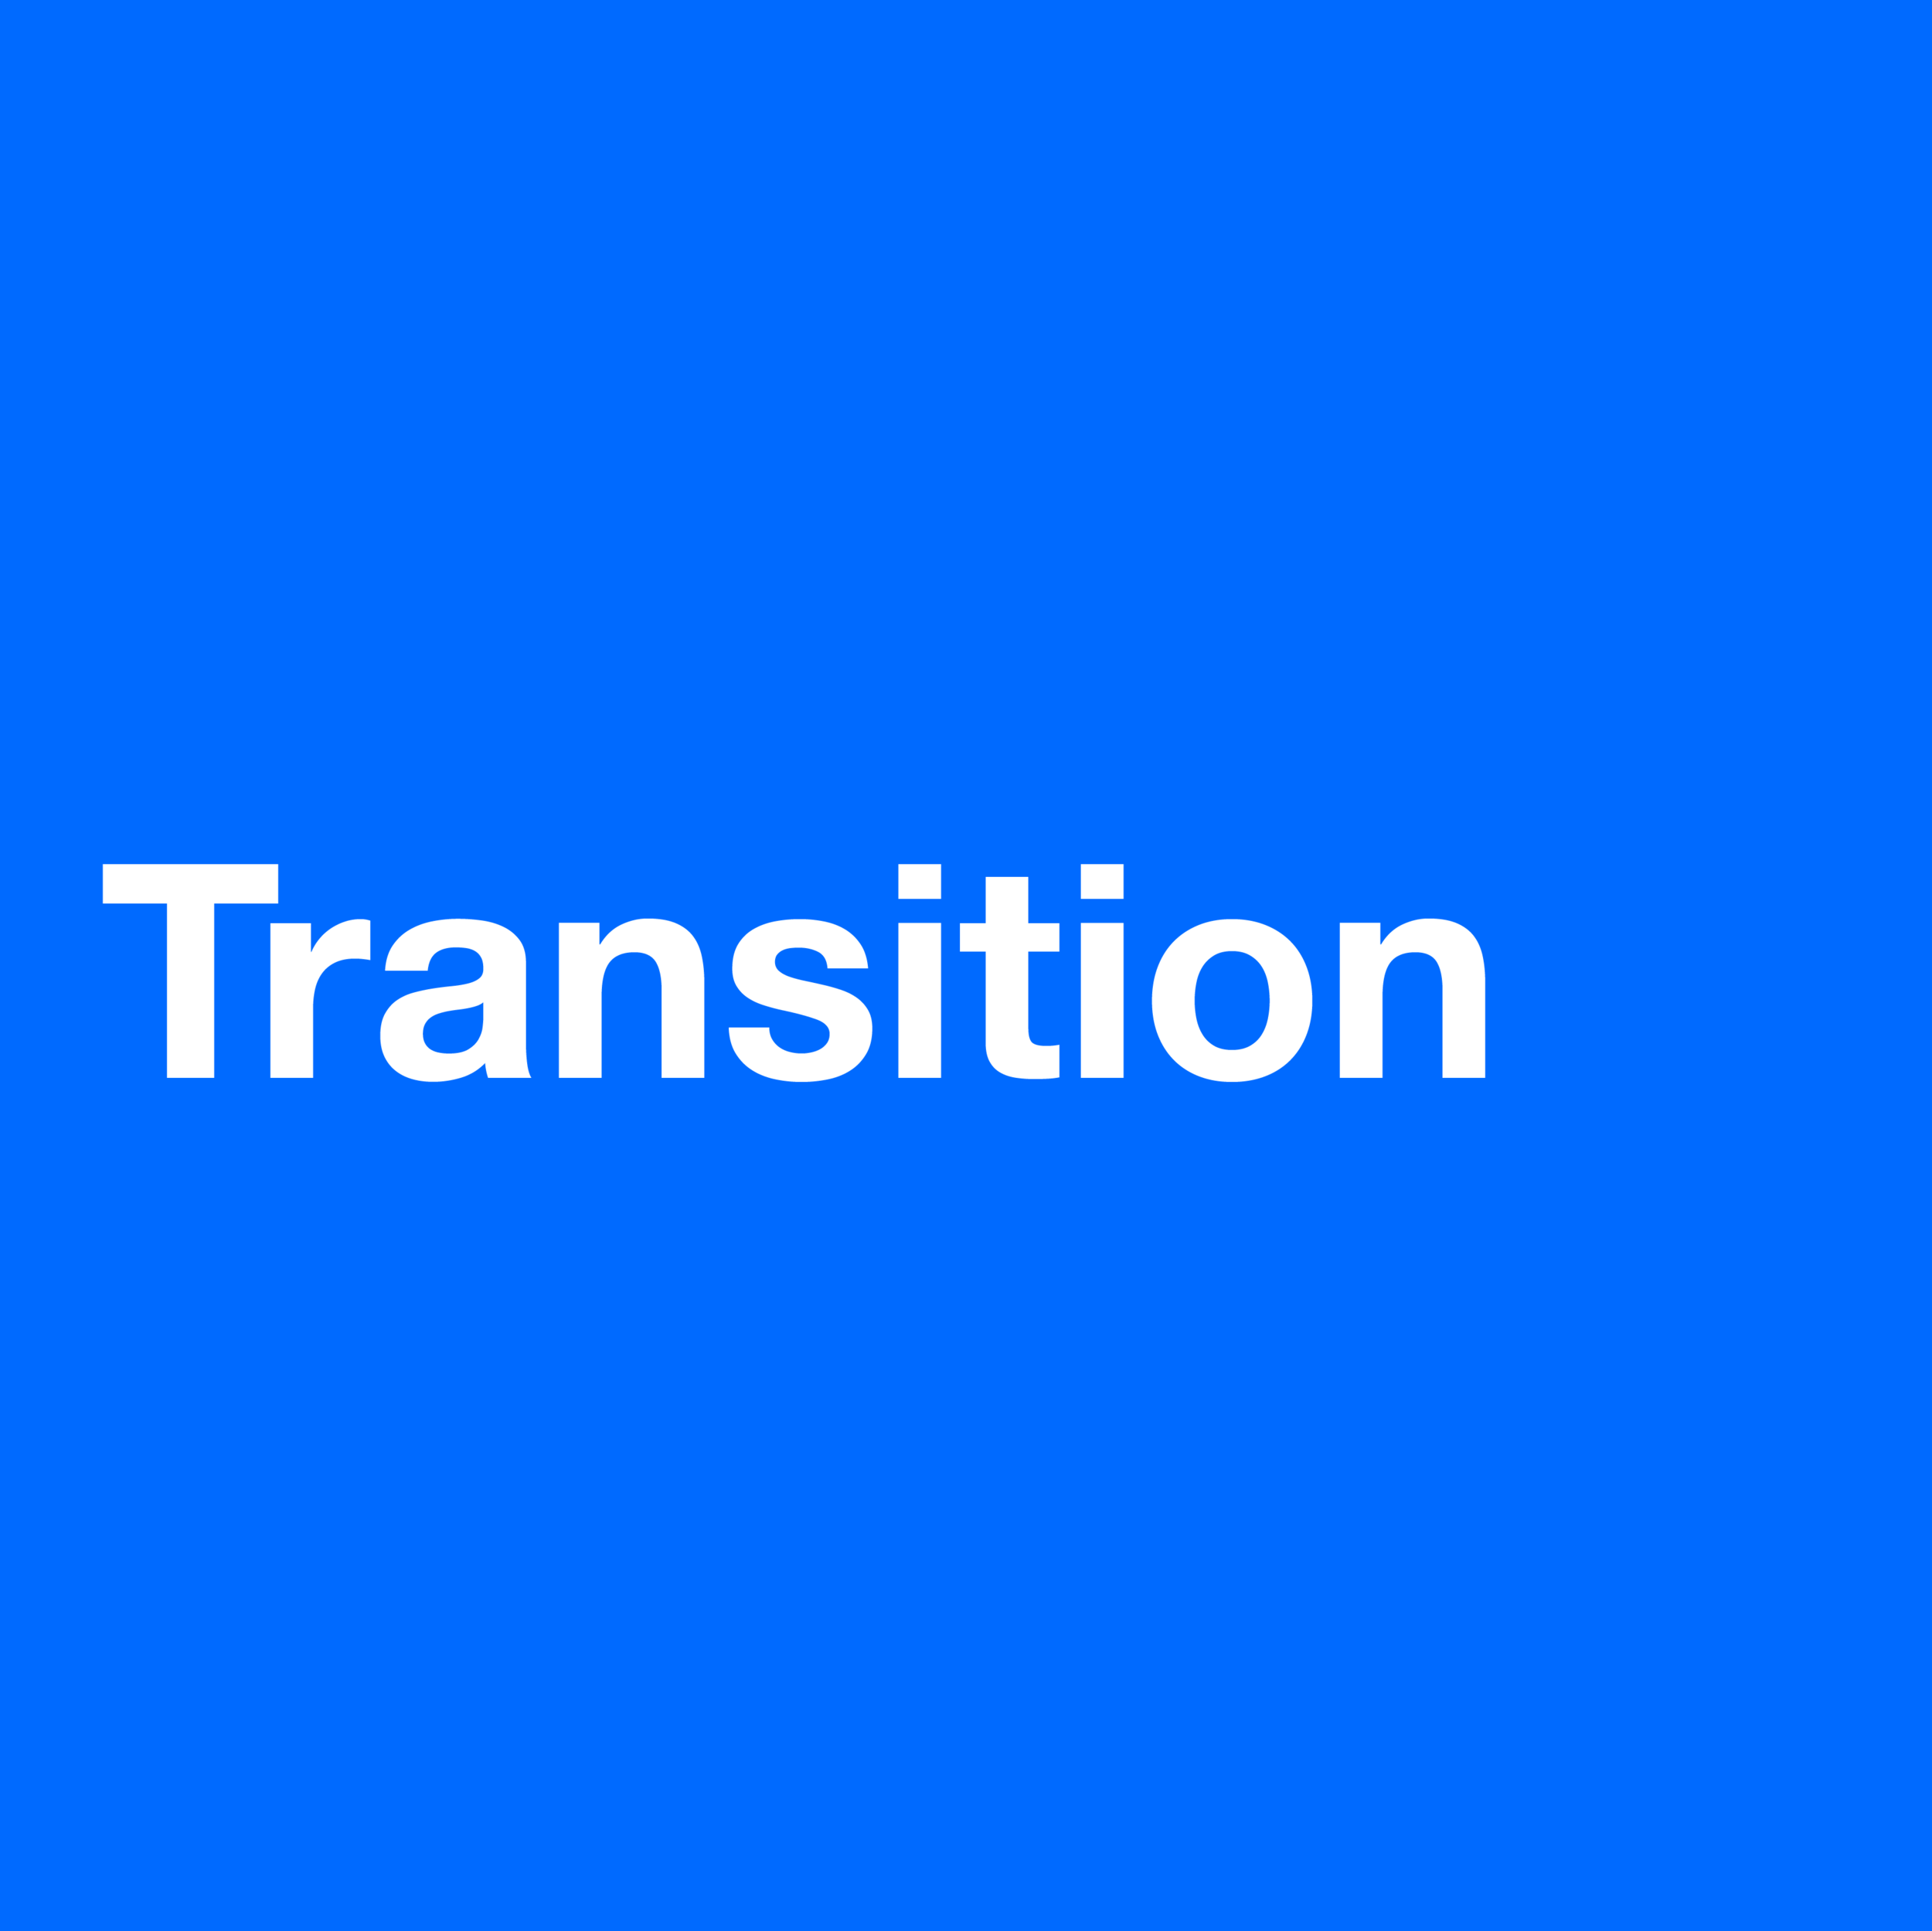  Transition Definition 